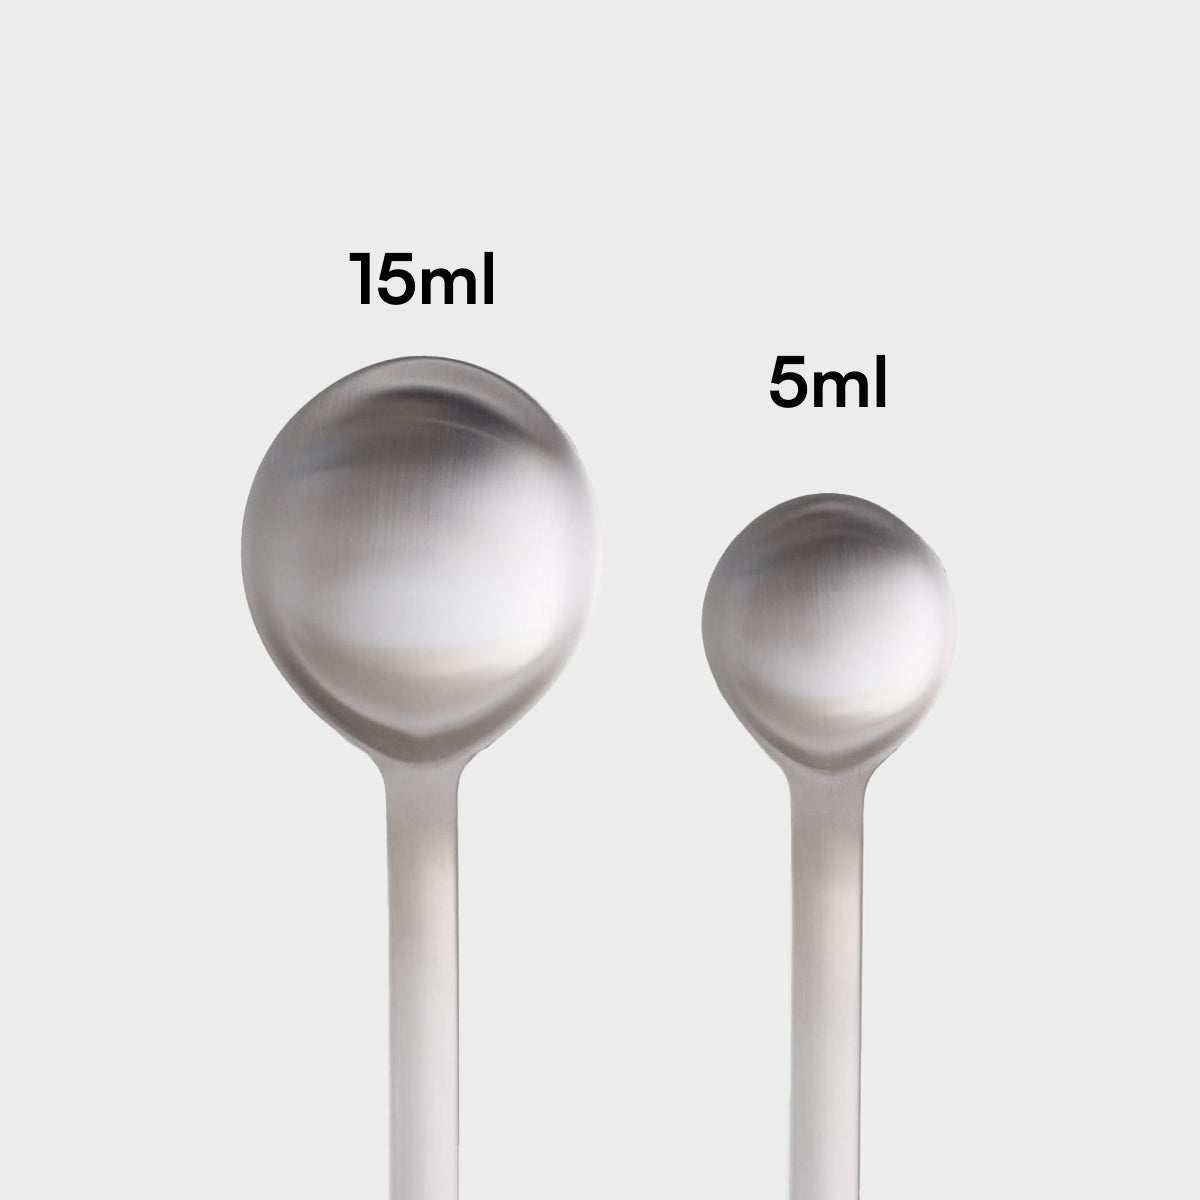 Stainless Steel Measuring Spoon YAKUSAJI 5ml